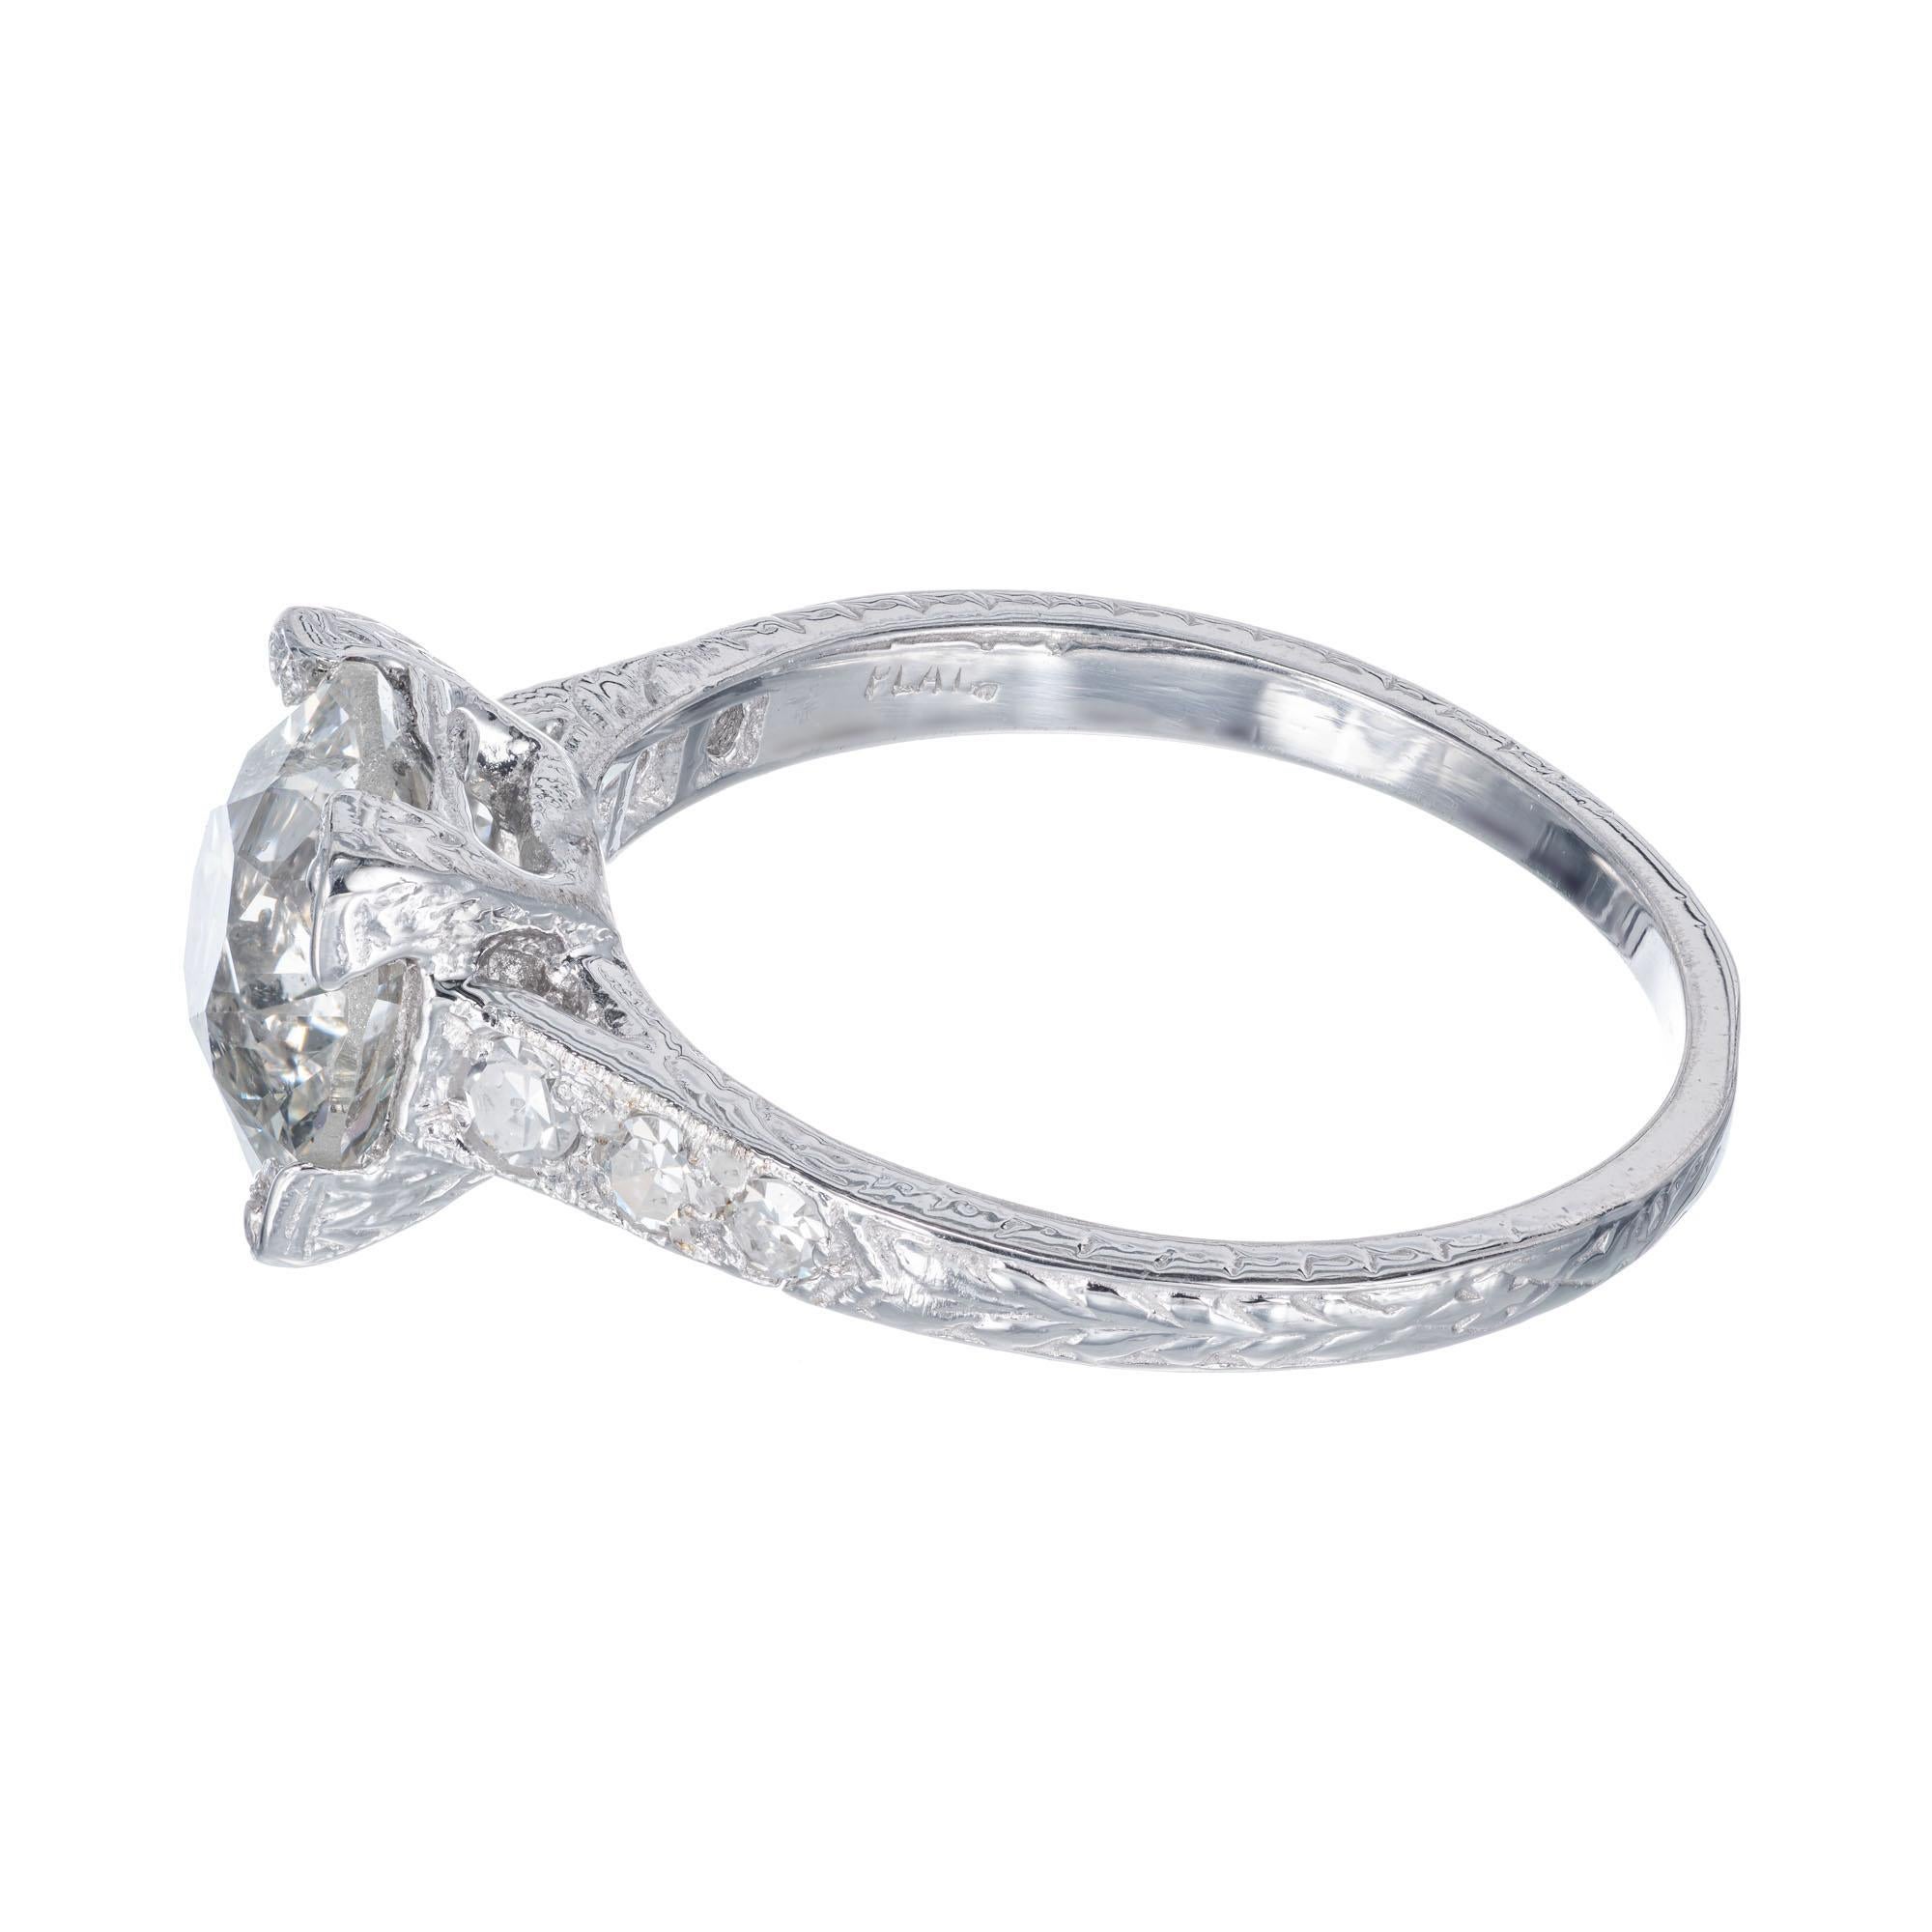 Old European Cut EGL Certified 1.96 Carat Diamond Platinum Engagement Ring